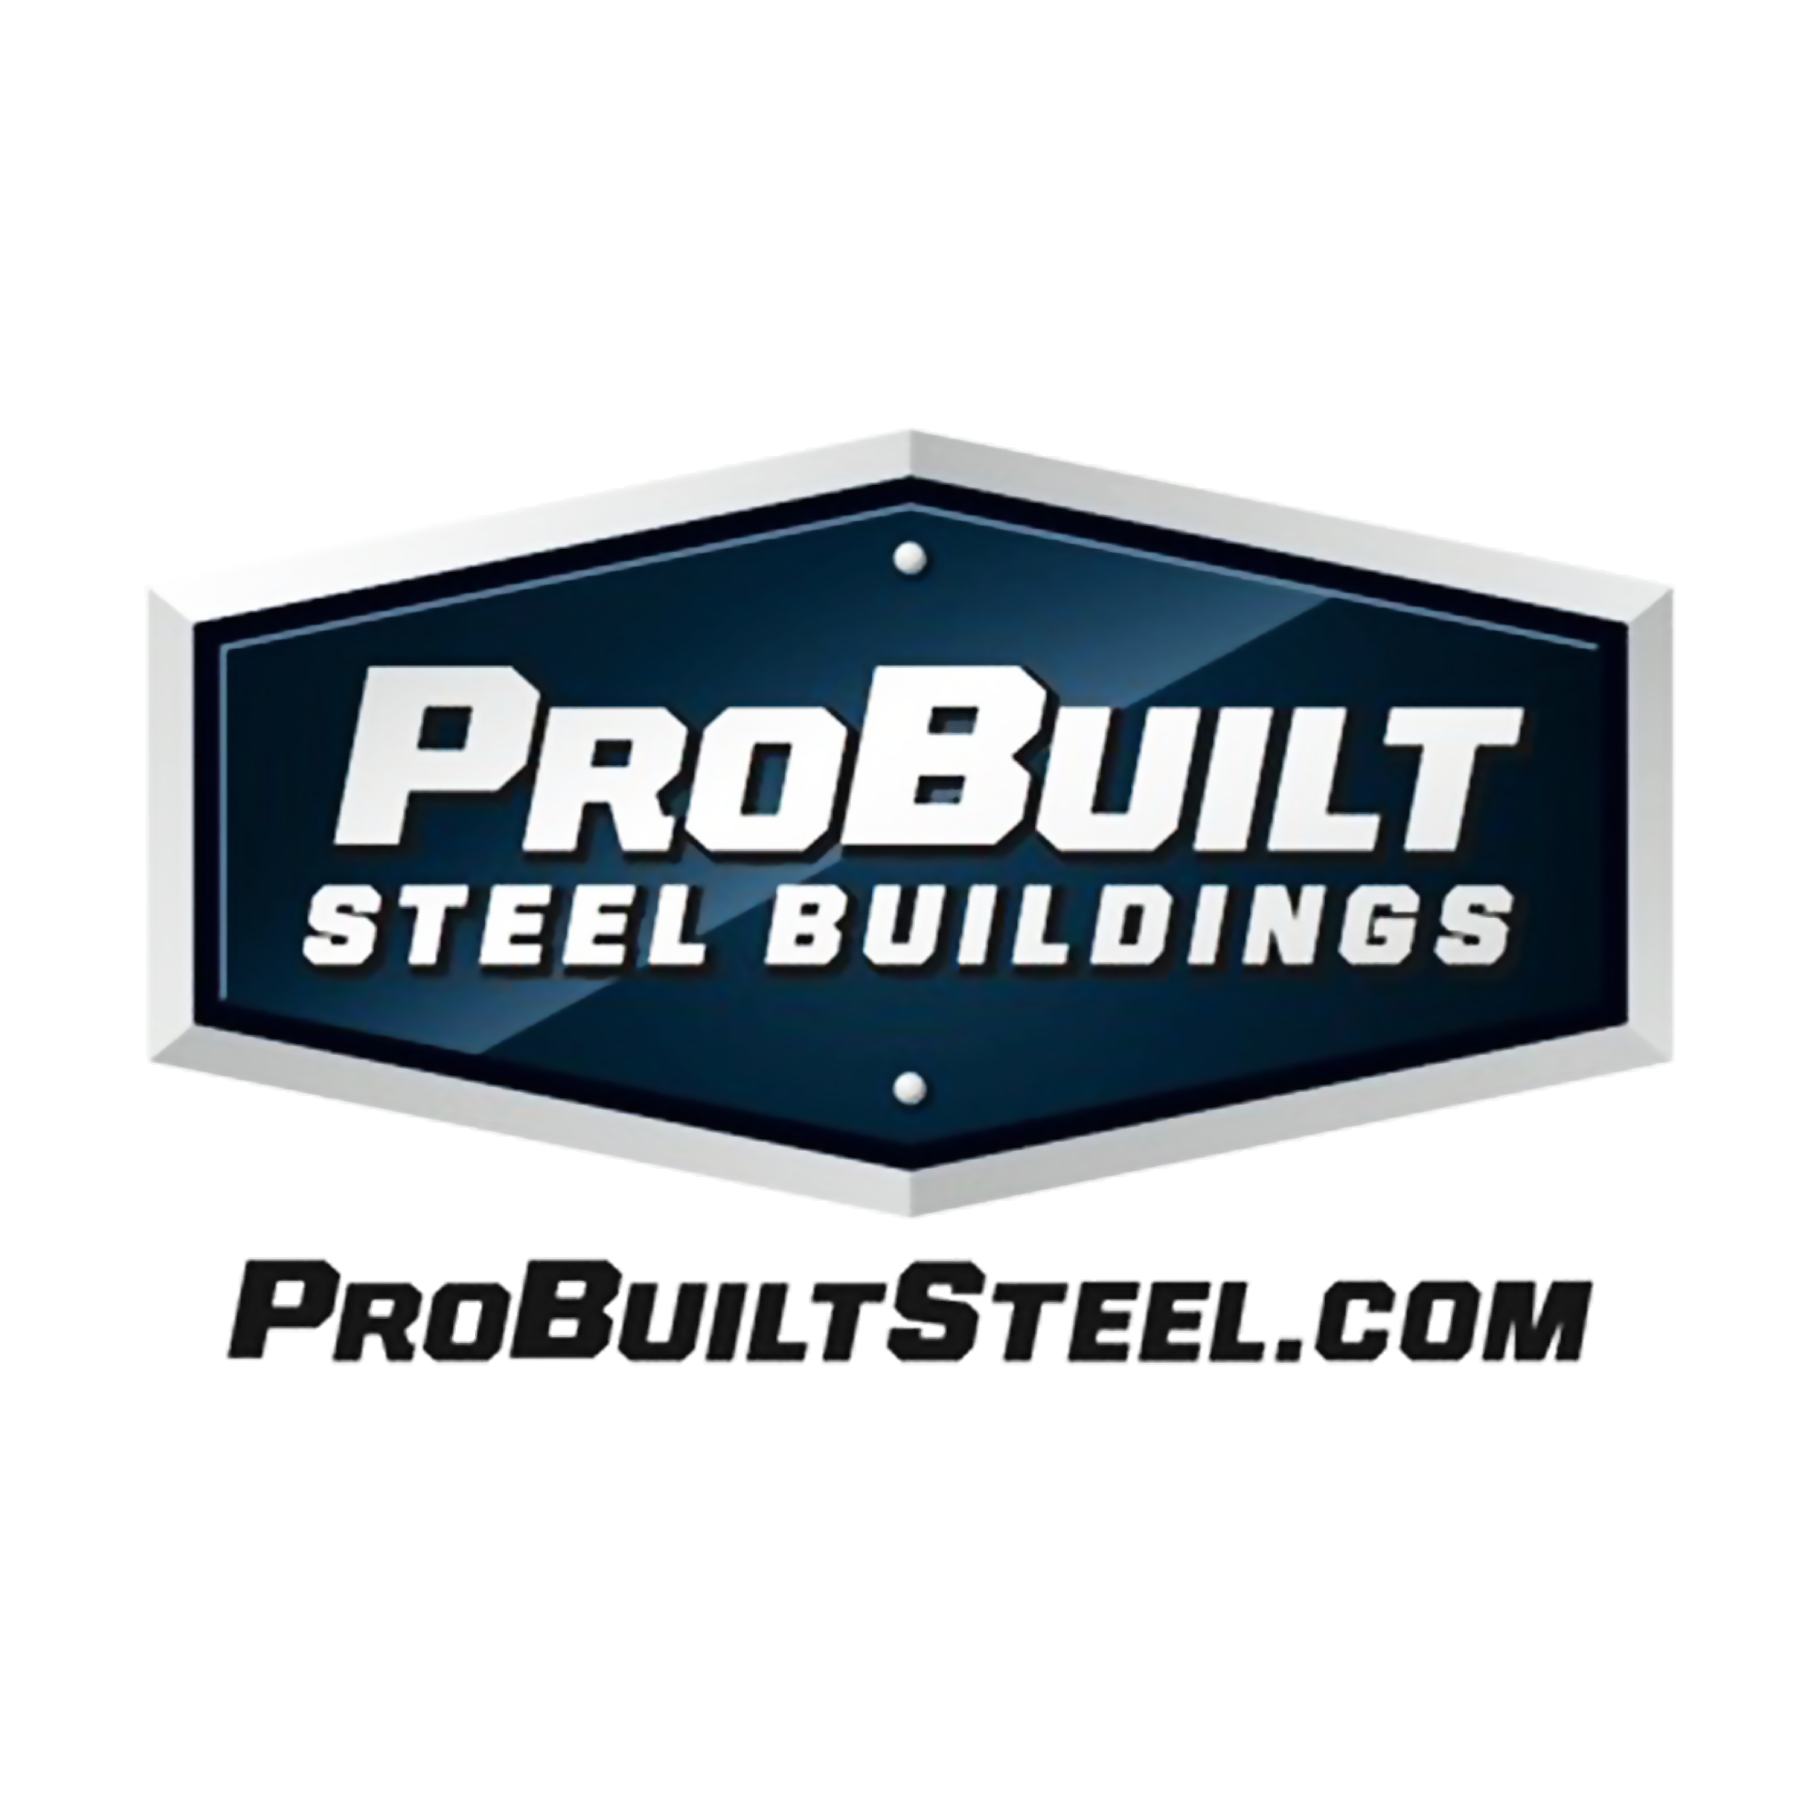 PROBUILT STEEL BUILDINGS